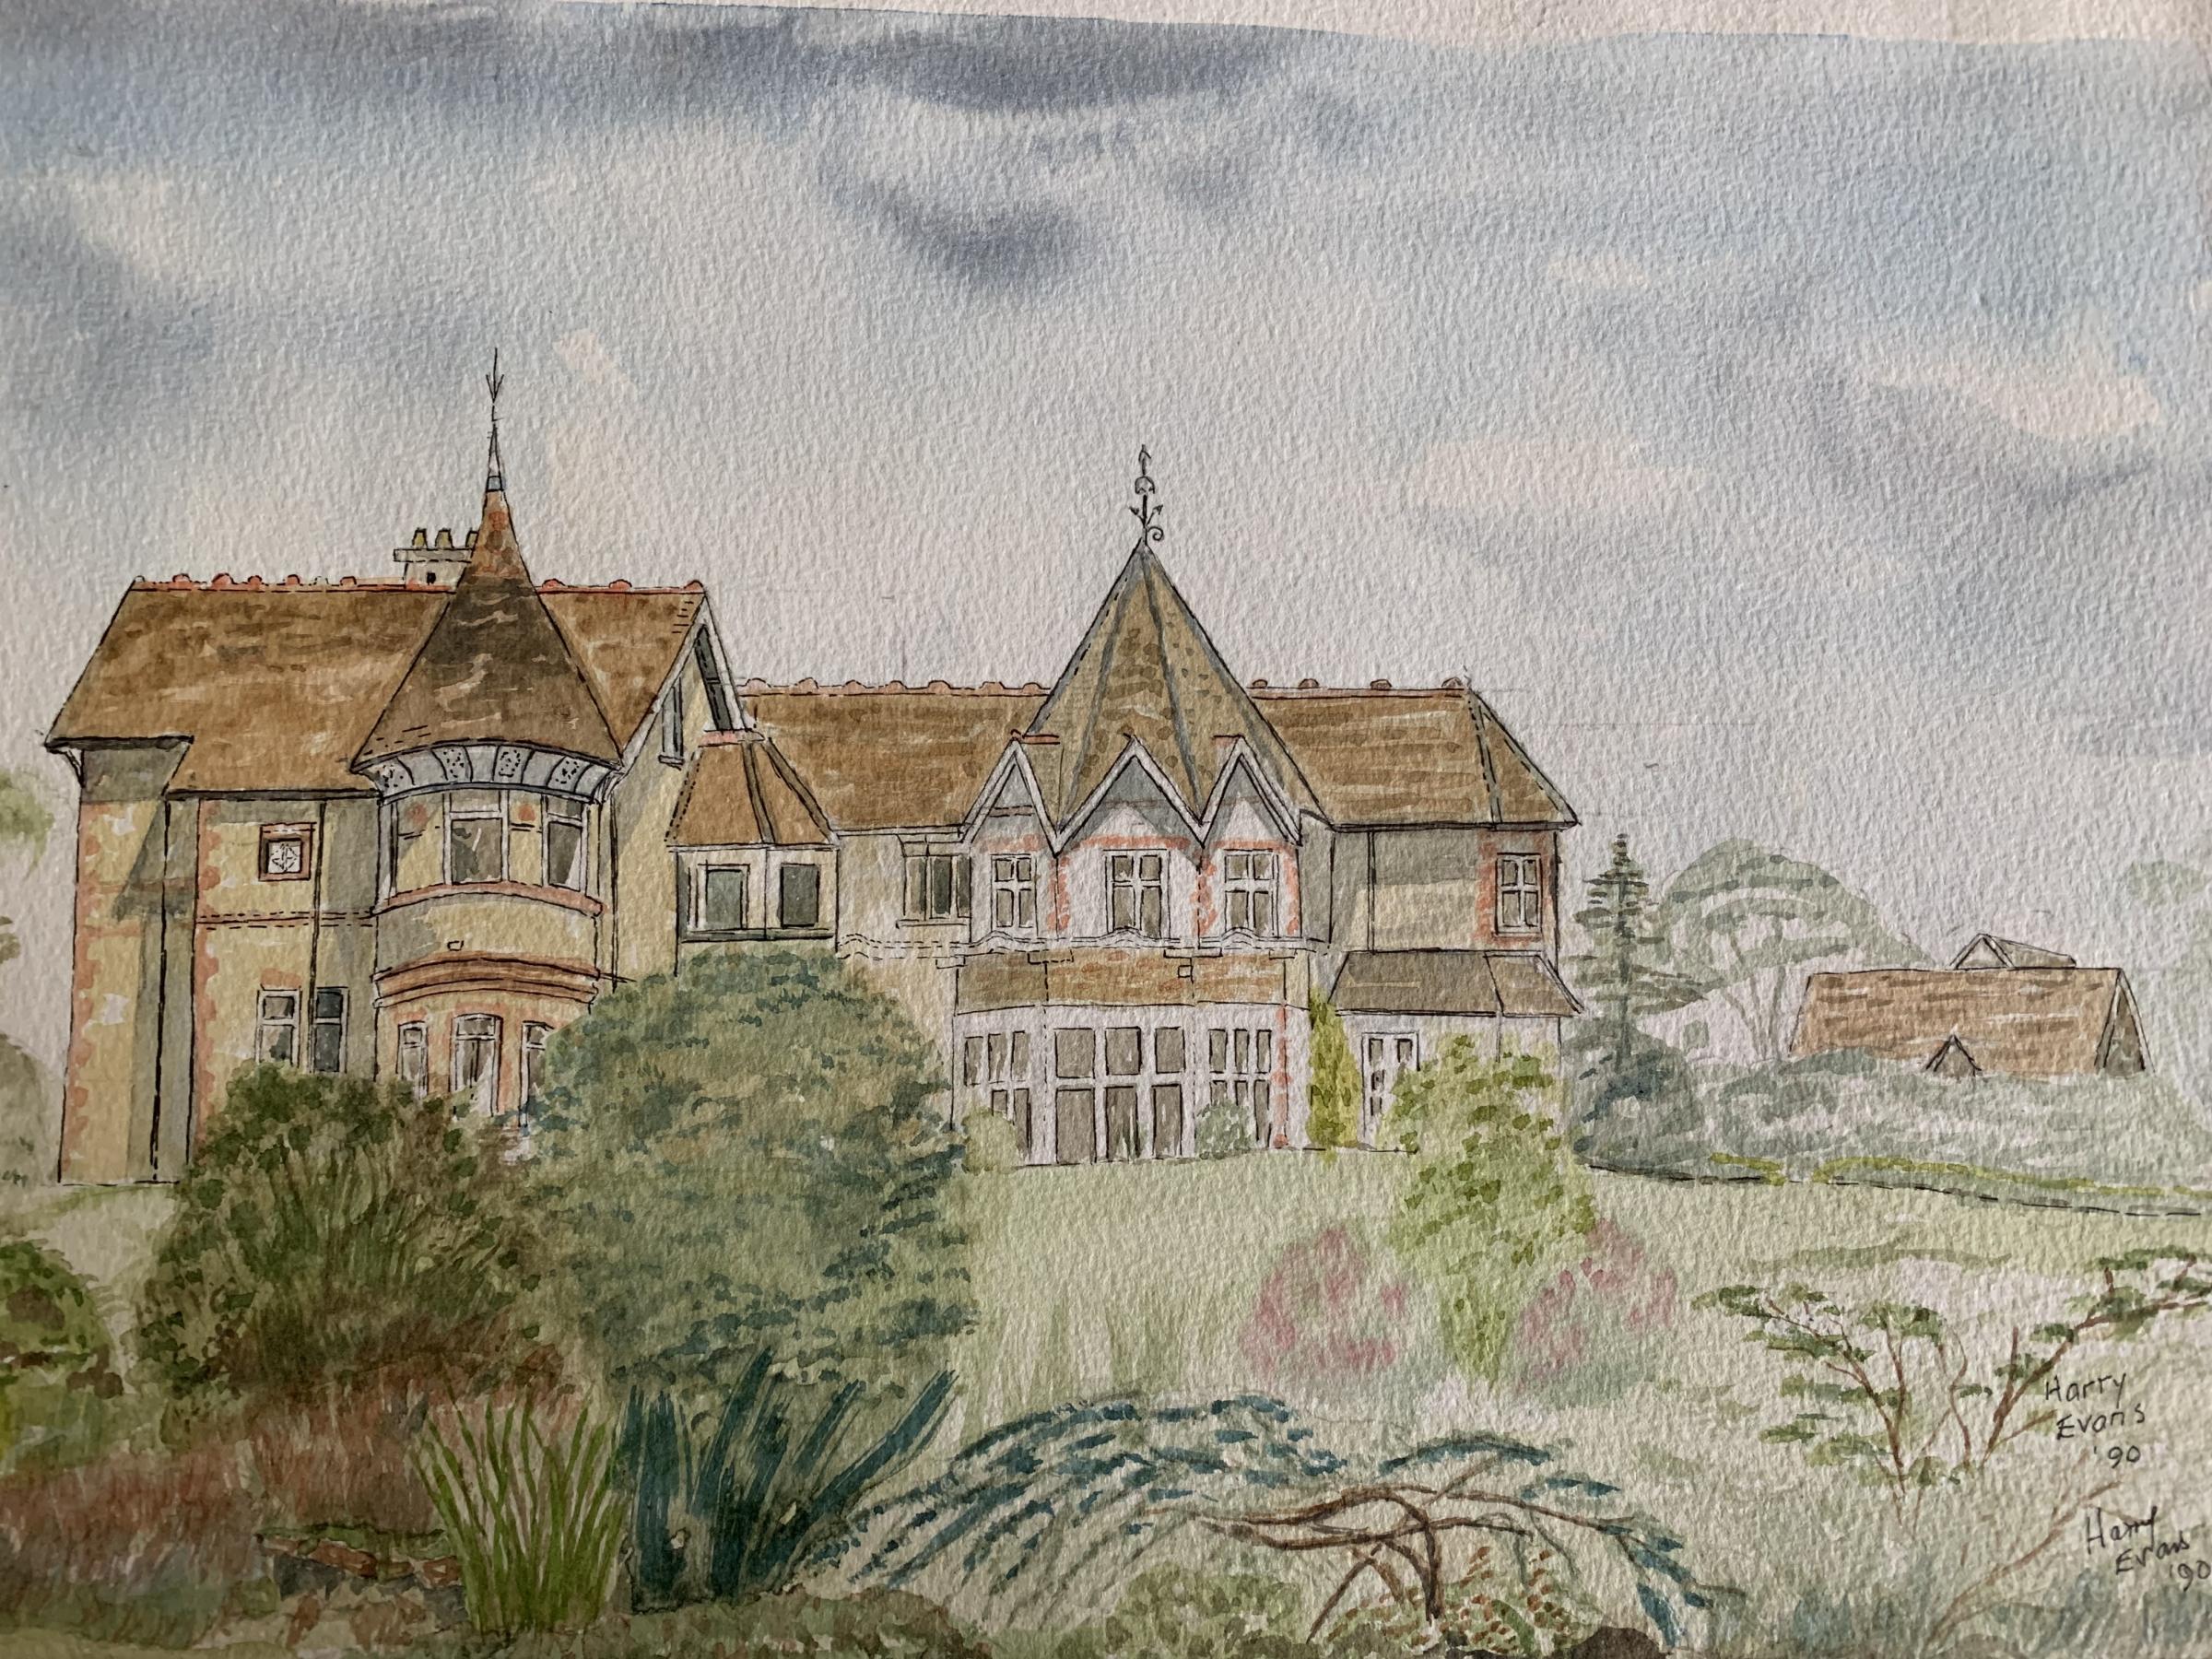 Harry Evans’ painting of Oxhey Grange, 1990